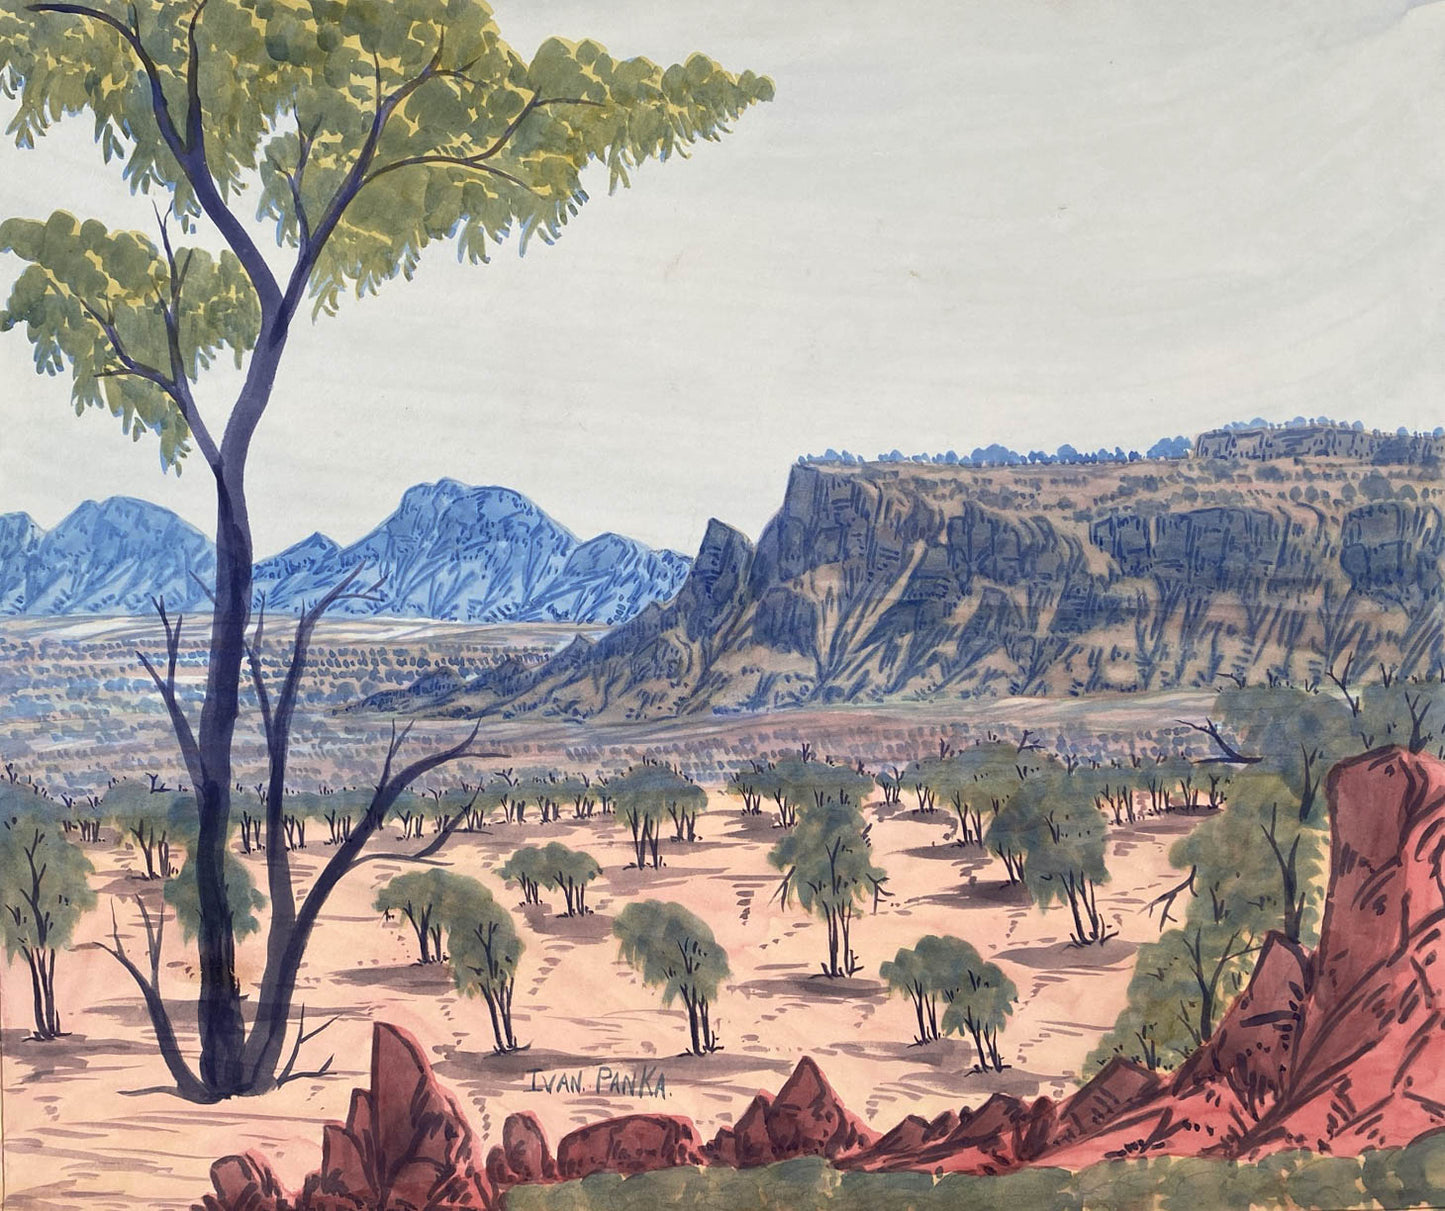 IVAN PANKA - Central Australian Landscape